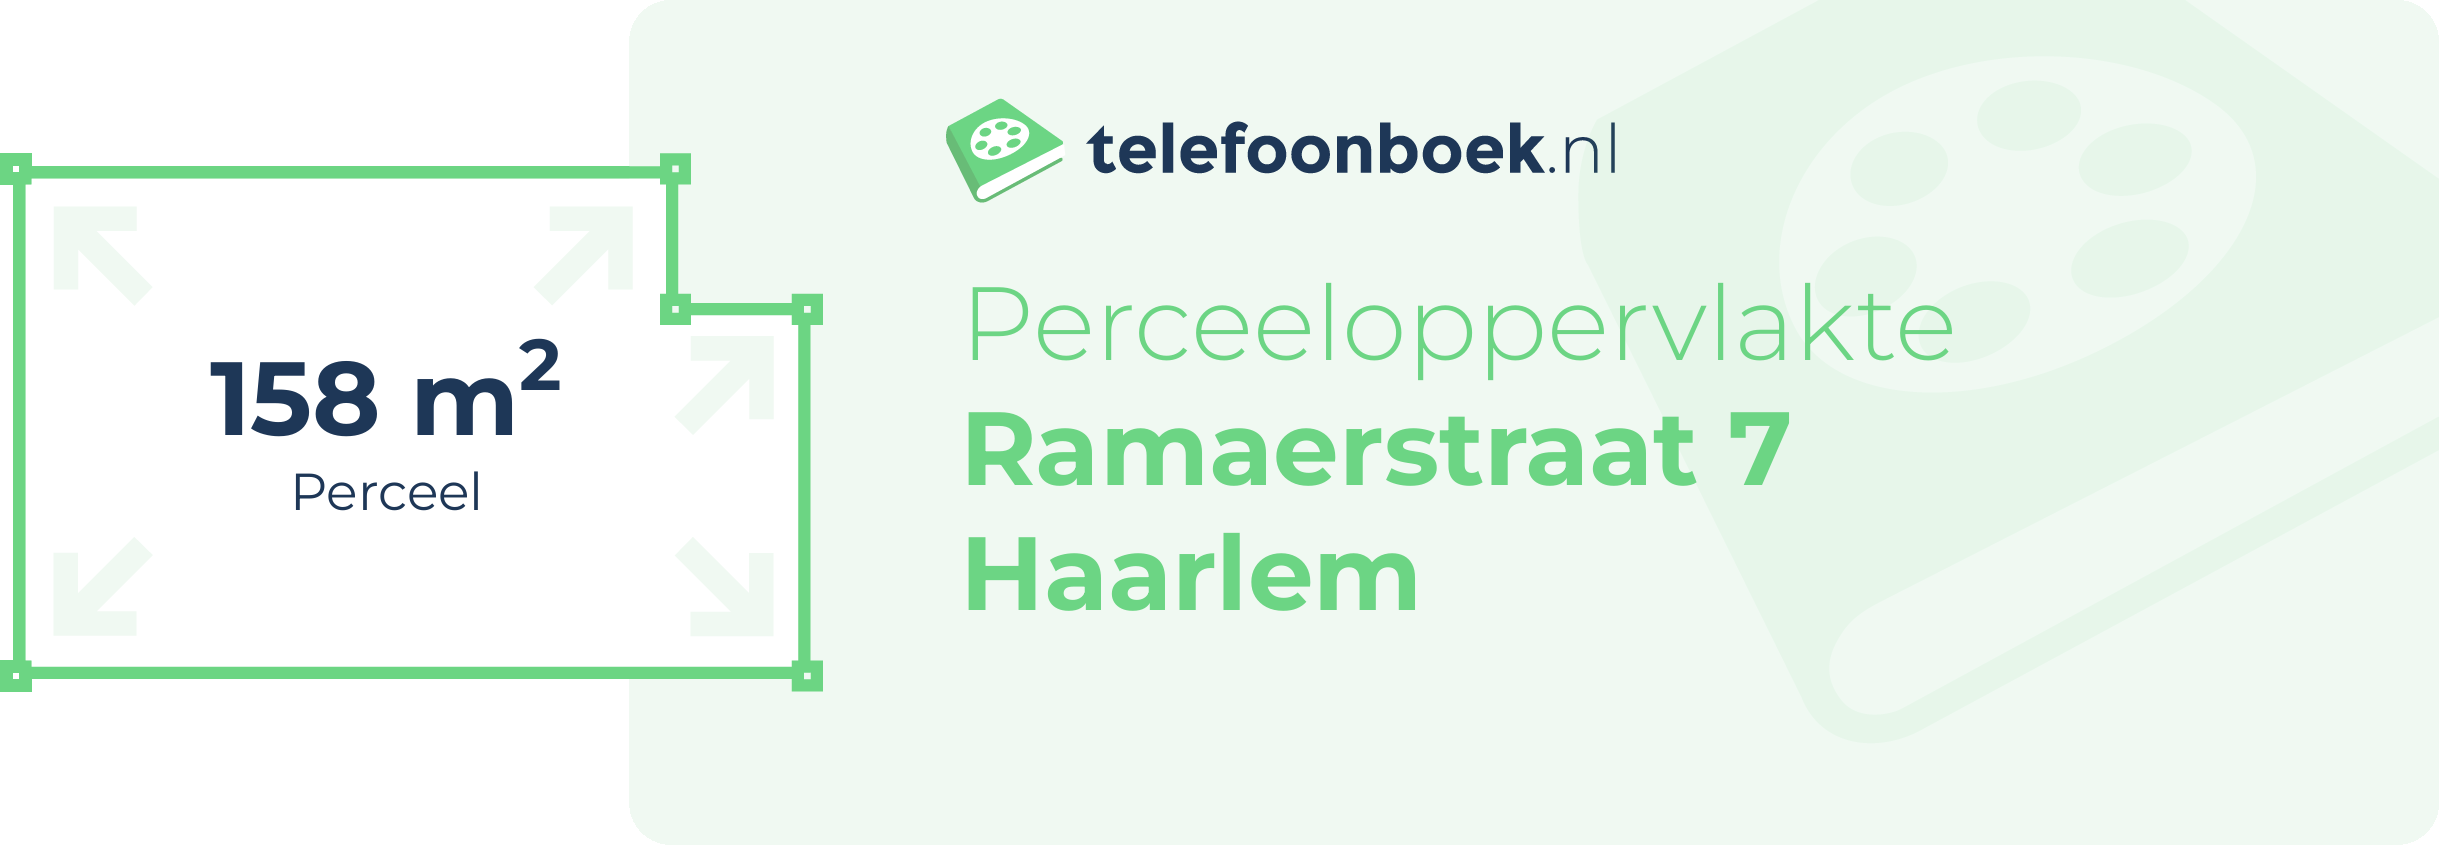 Perceeloppervlakte Ramaerstraat 7 Haarlem